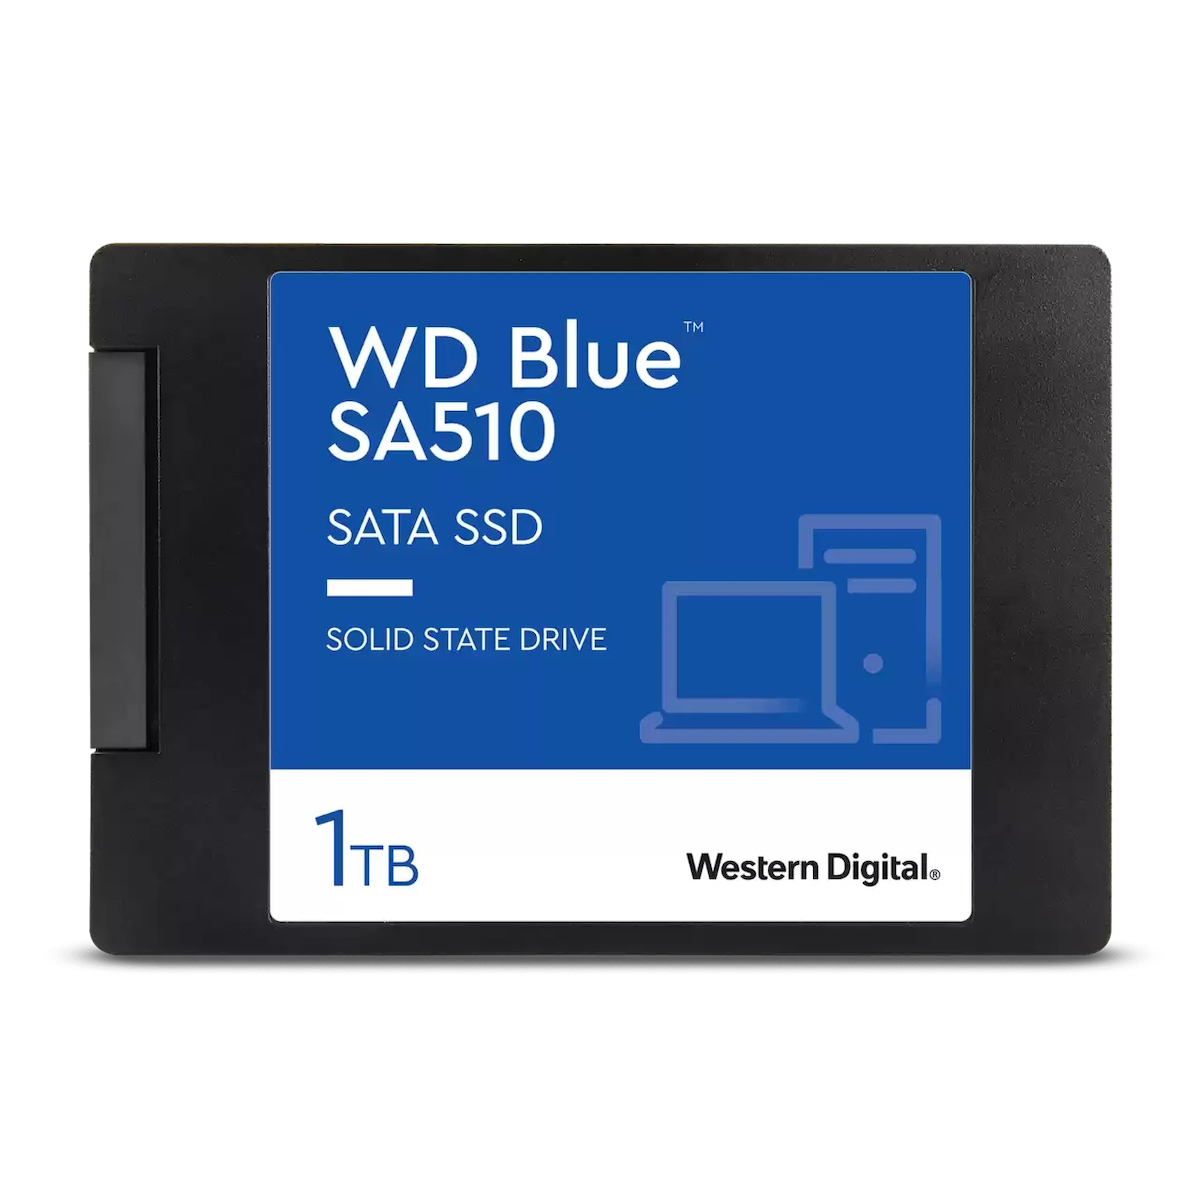 Western Digital SA510 SSD 1TB 2.5” SATA III